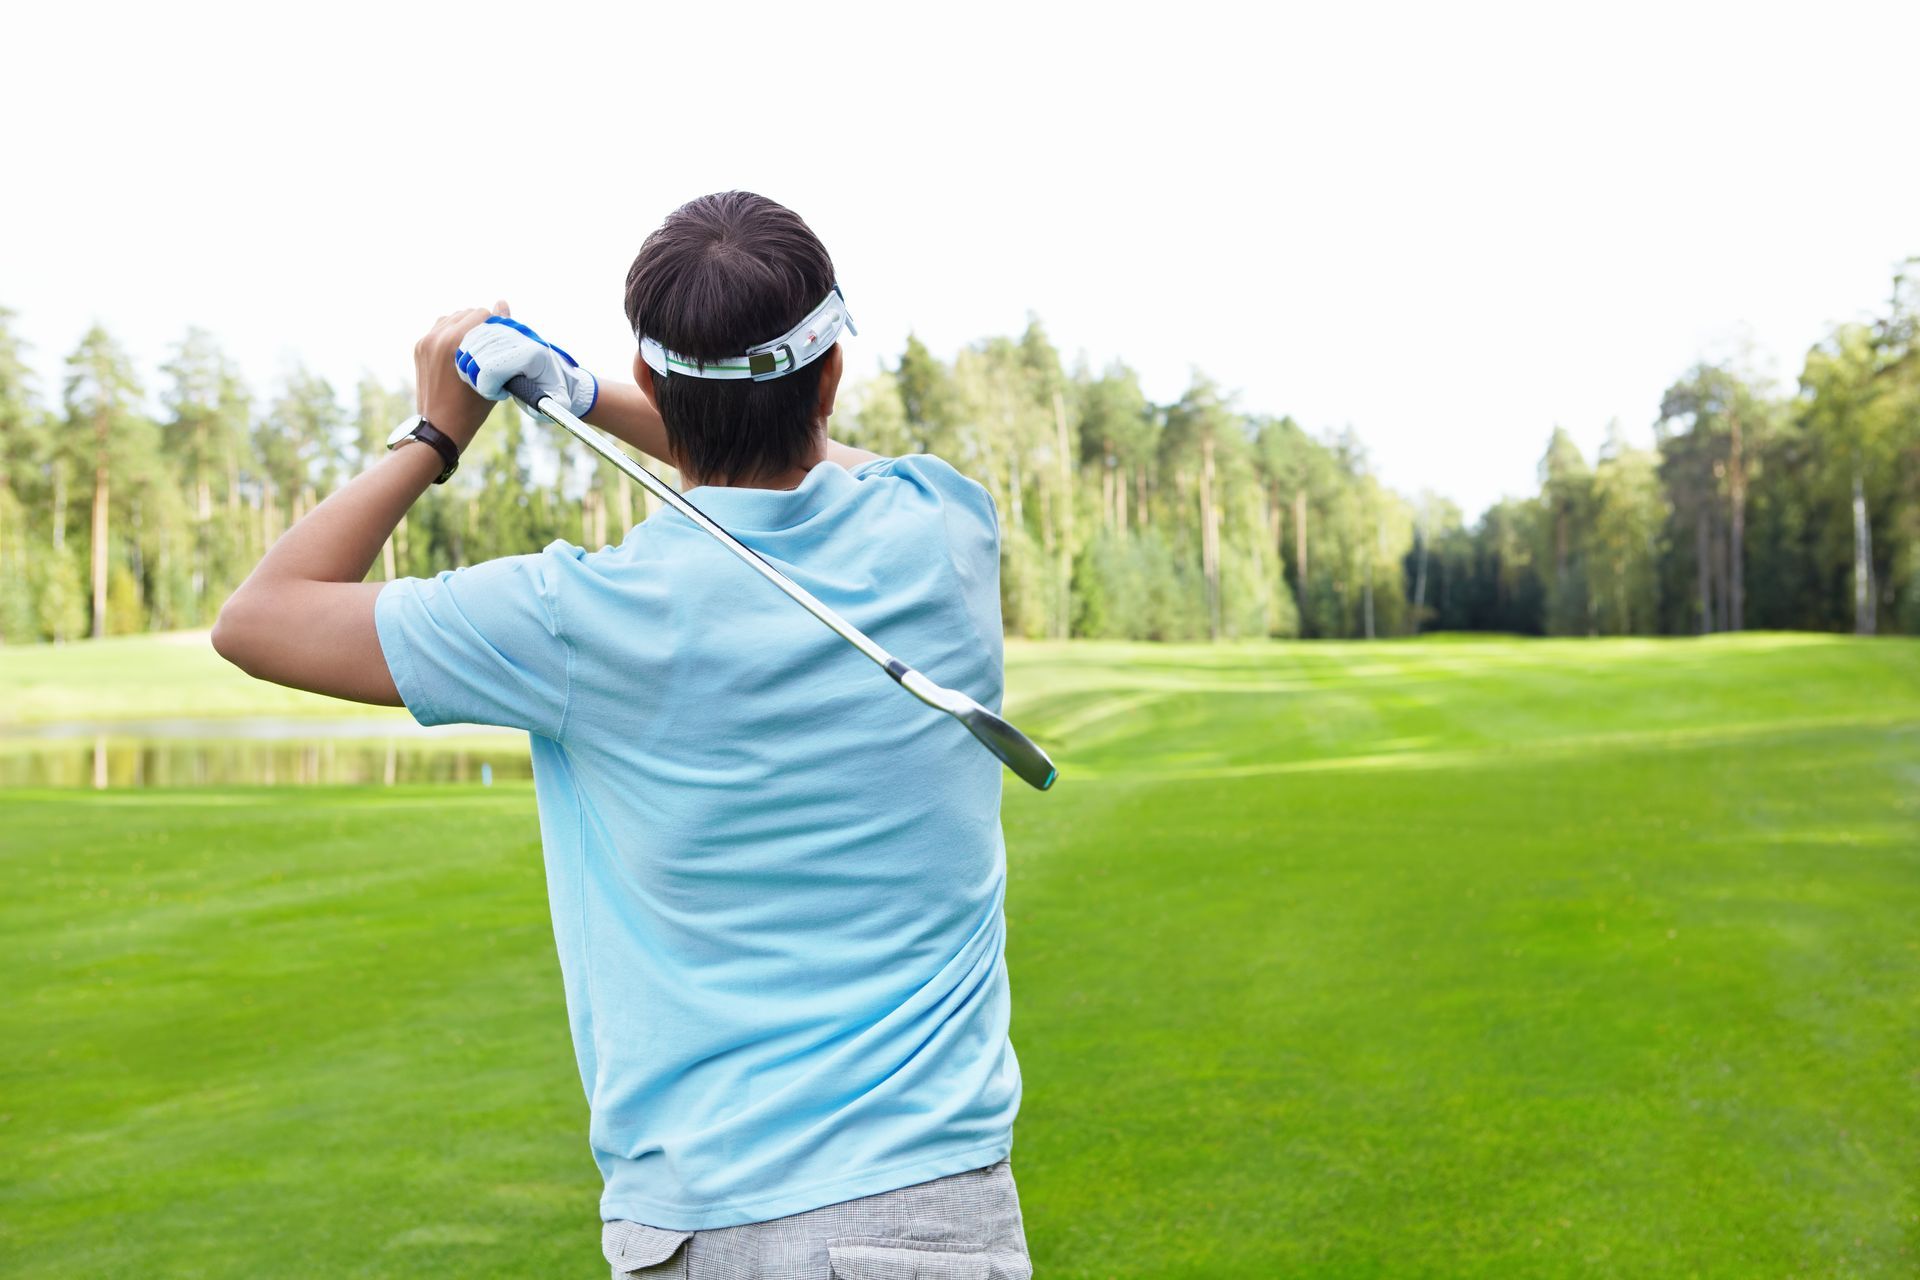 a man is swinging a golf club on a golf course .